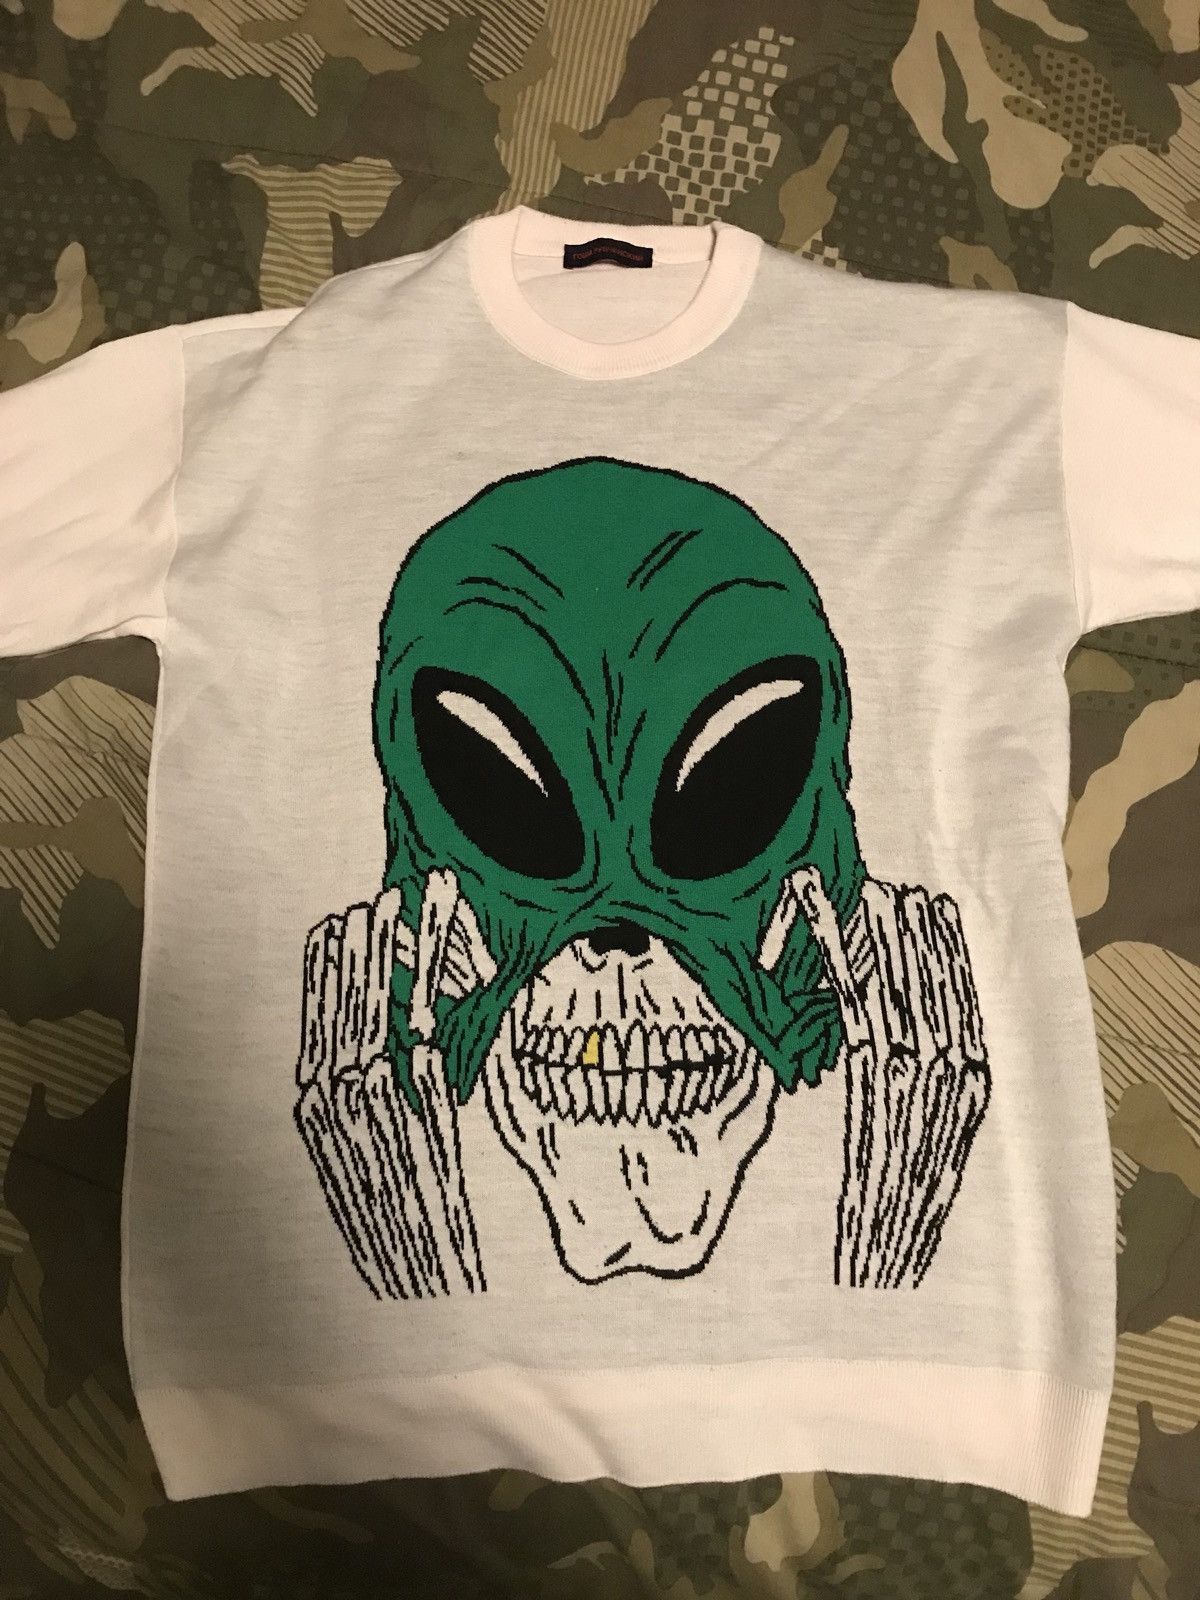 Gosha Rubchinskiy Instarsia Alien Skull Sweater | Grailed